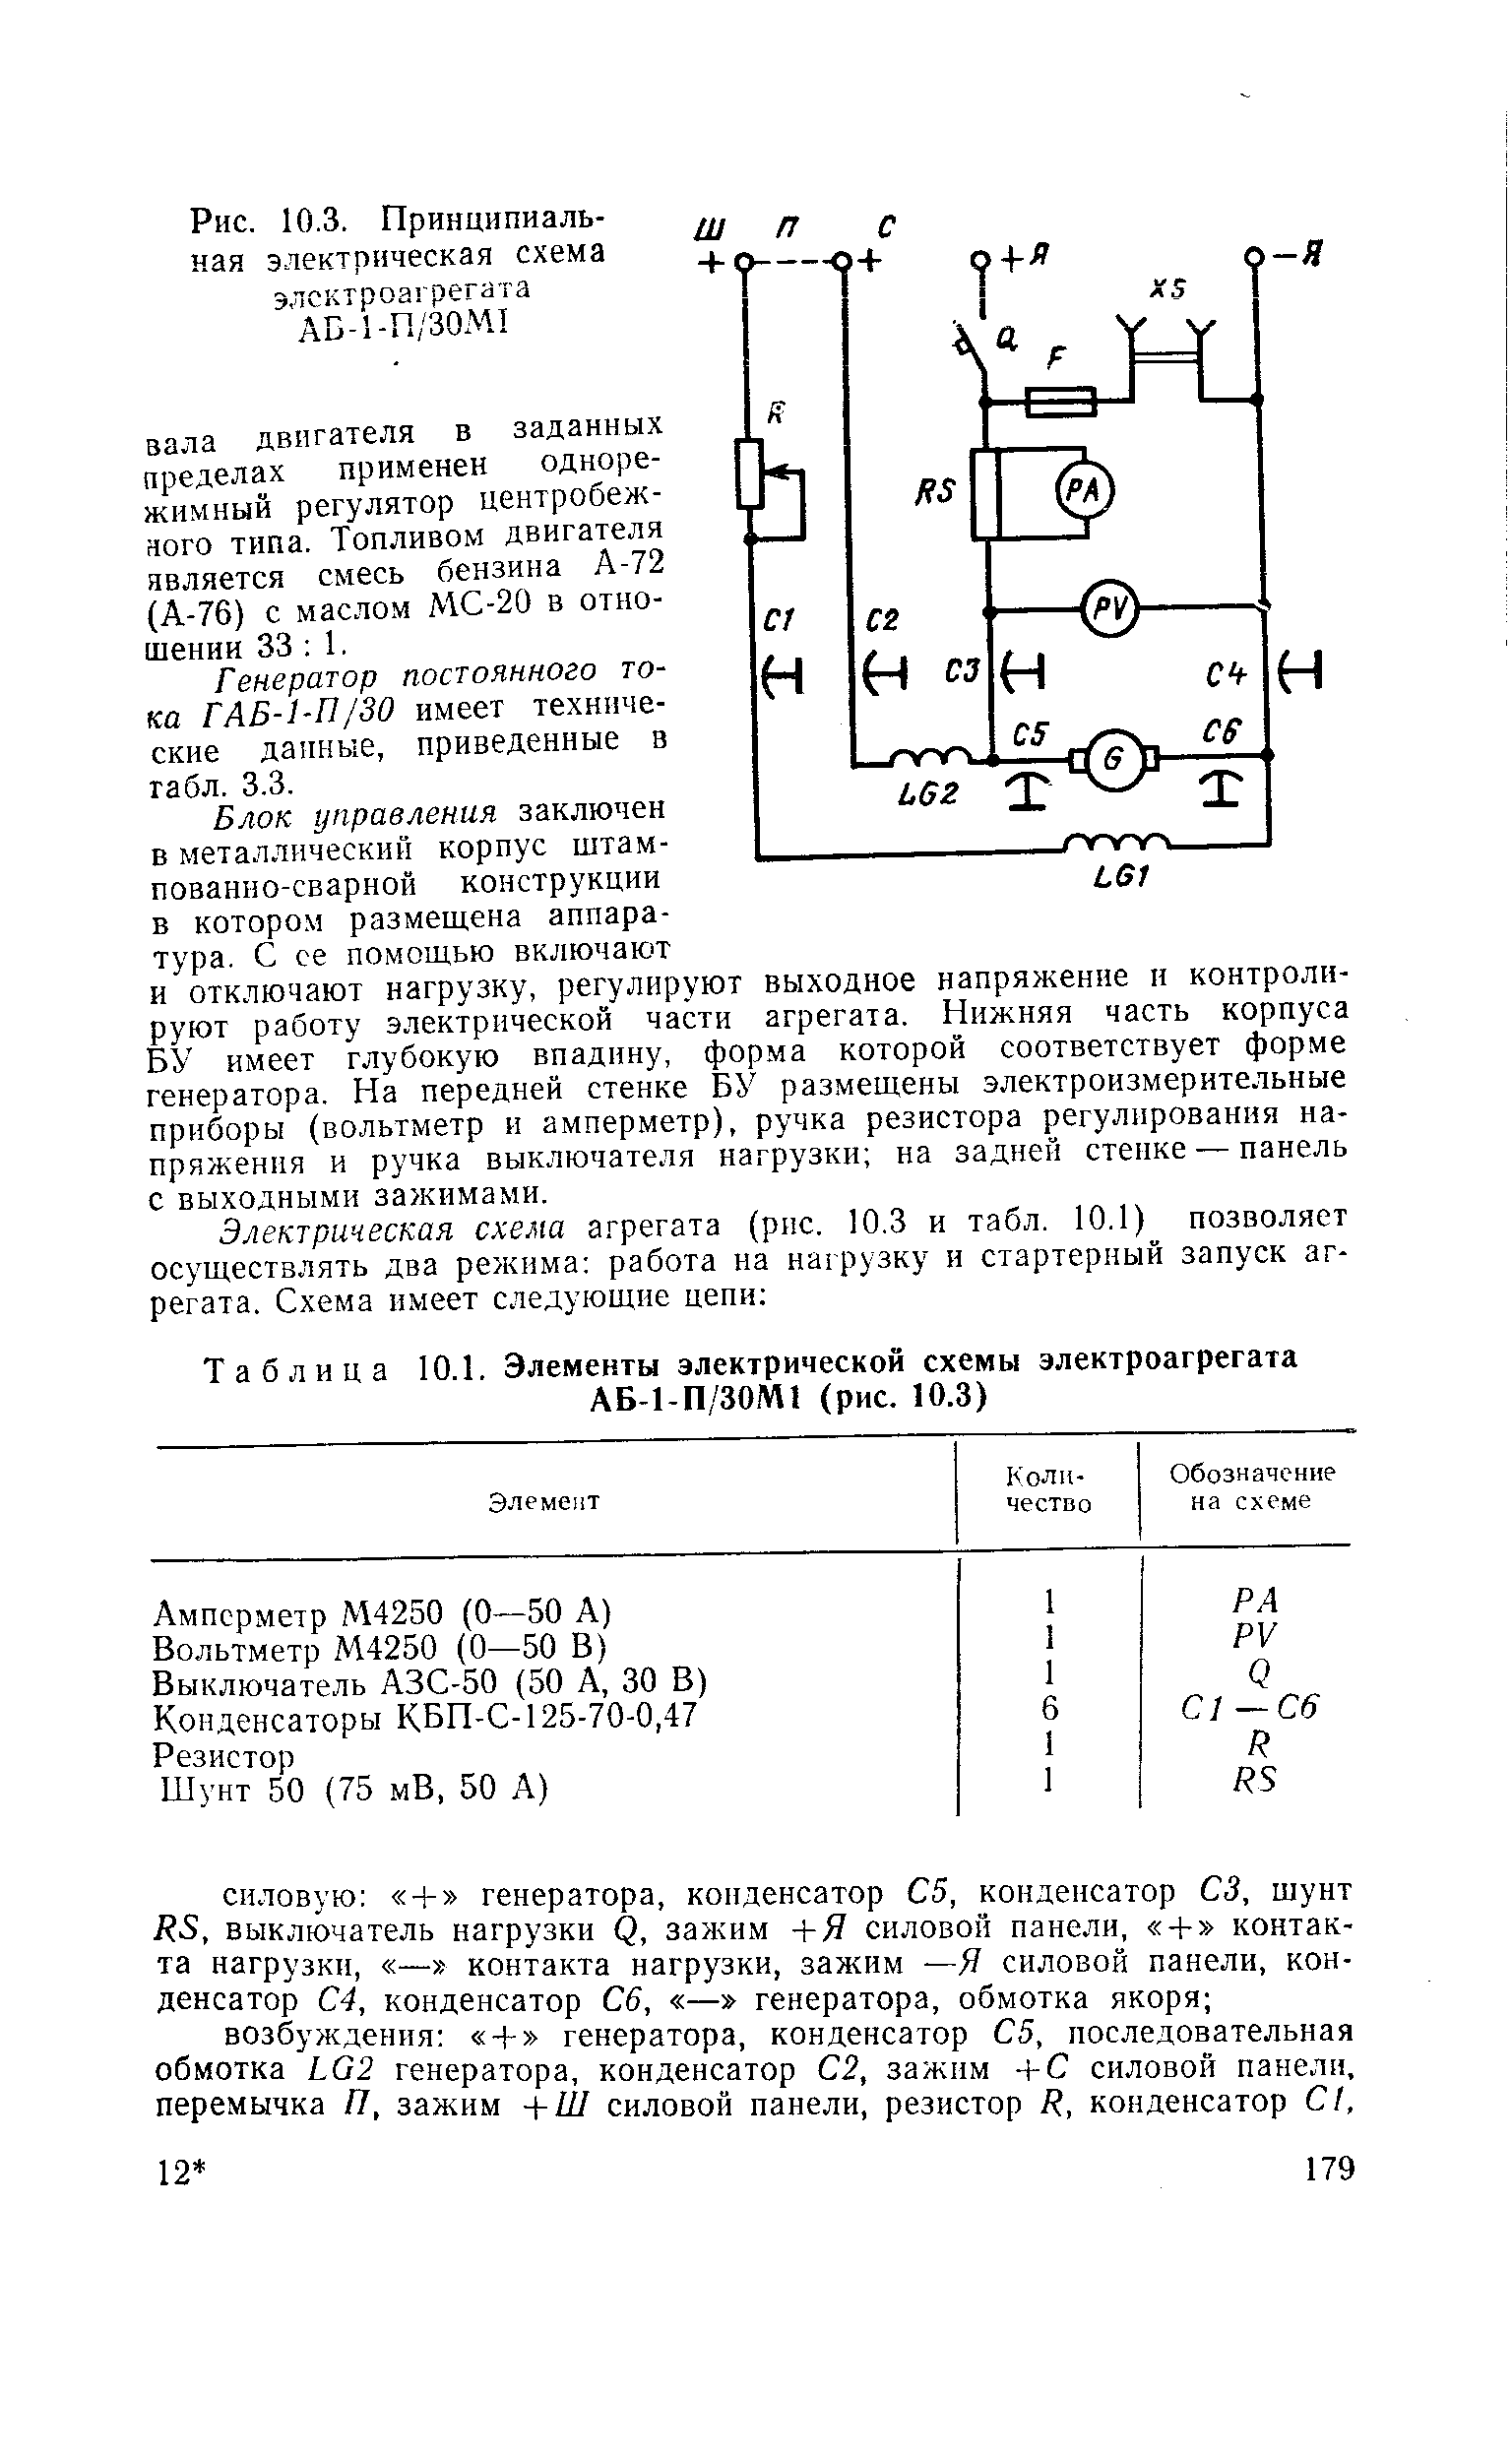 Таблица 10.1. Элементы электрической схемы электроагрегата АБ-1-П/30М1 (рис. 10.3)
